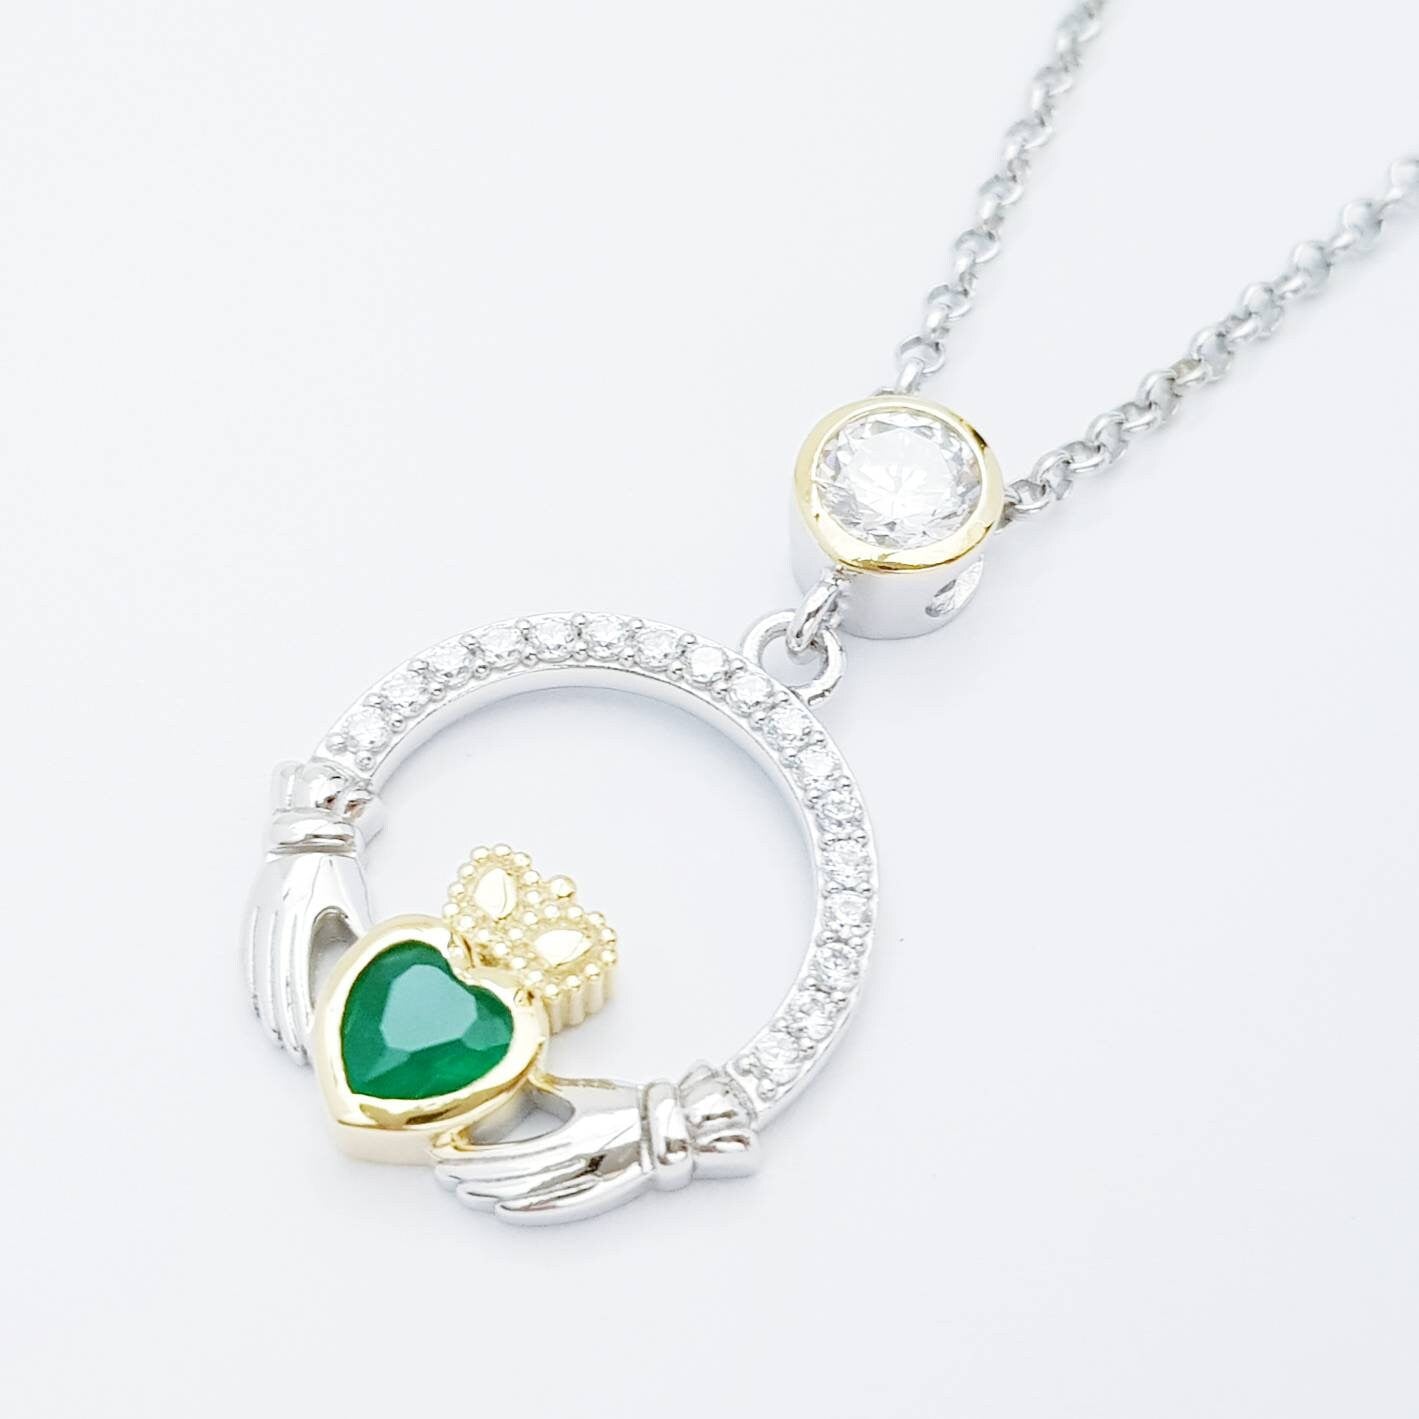 Green Claddagh pendant, claddagh necklace, silver claddagh pendant